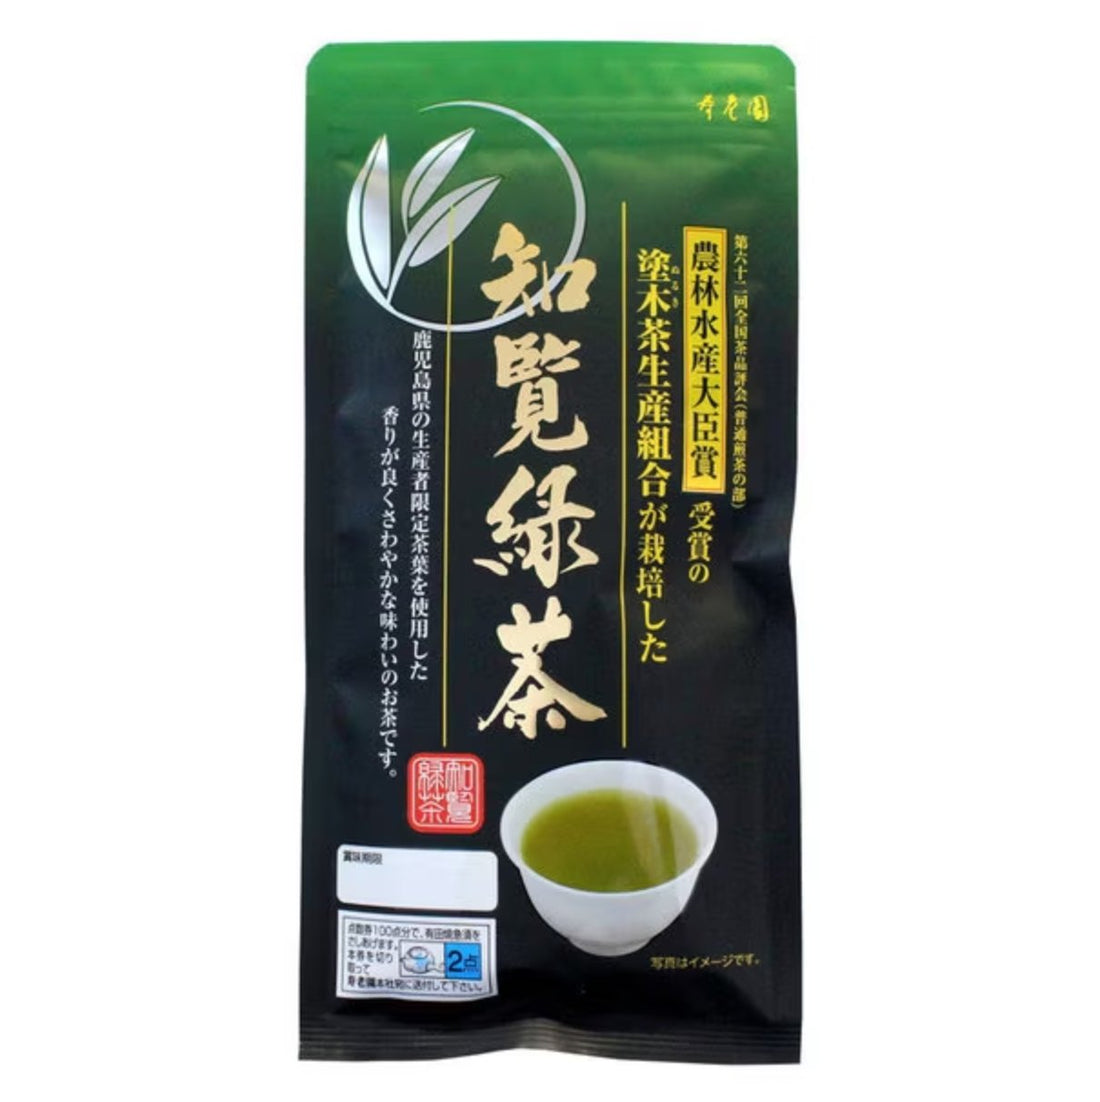 Juroen Chiran green tea from Nuribokucha Production Association 100g - NihonMura